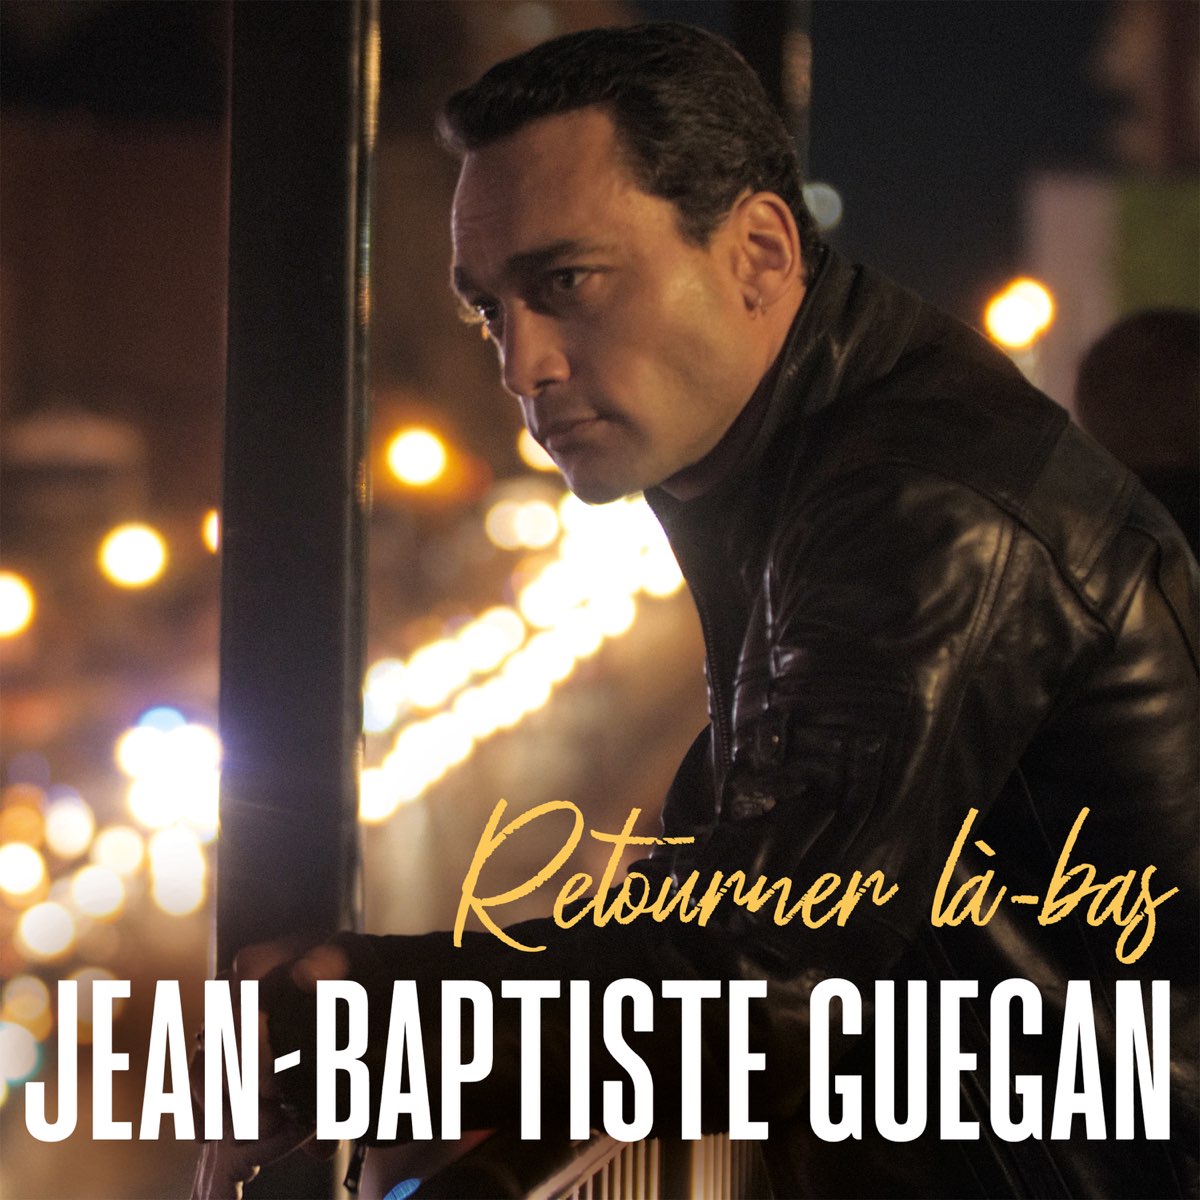 Retourner là-bas - Single by Jean-Baptiste Guegan on Apple Music